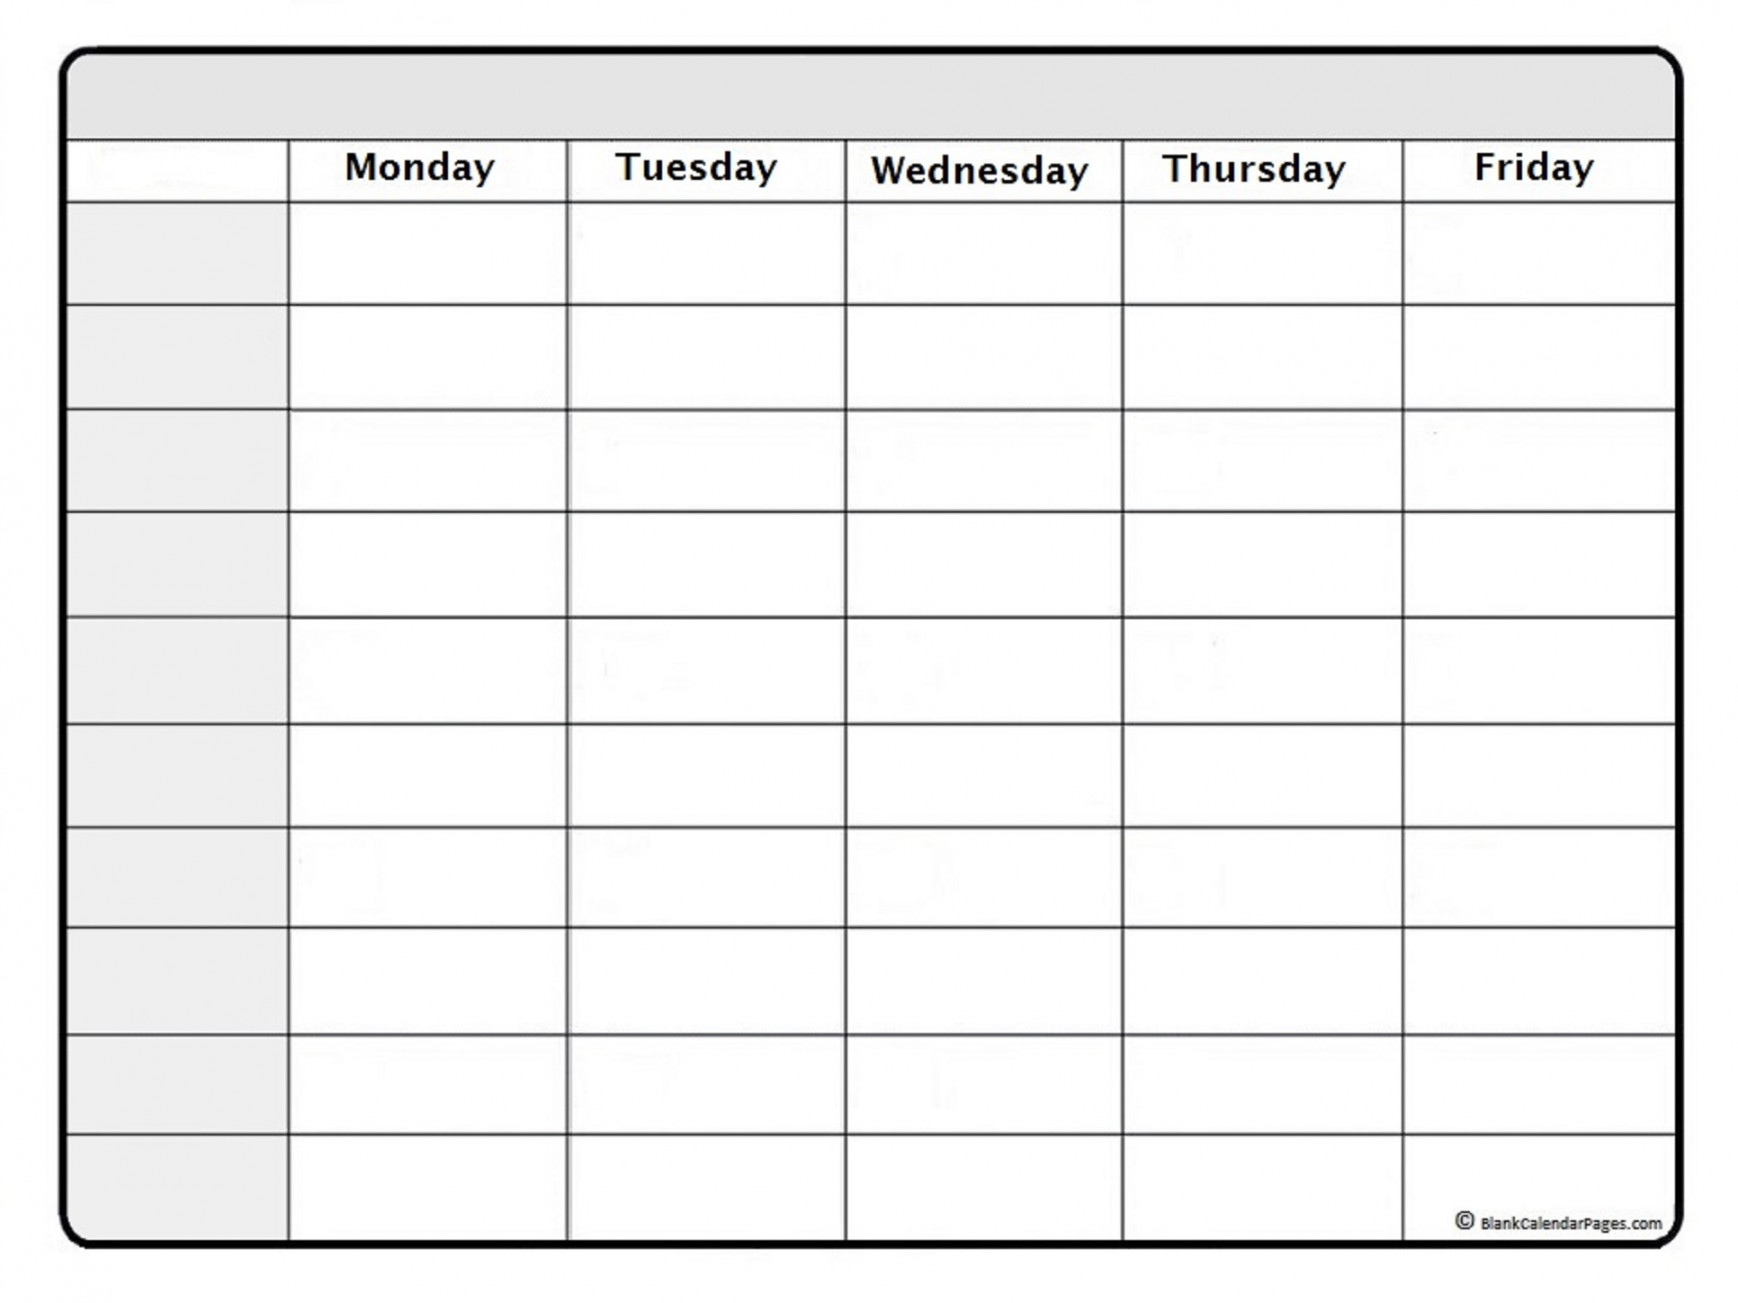 November  weekly calendar  November  weekly calendar template